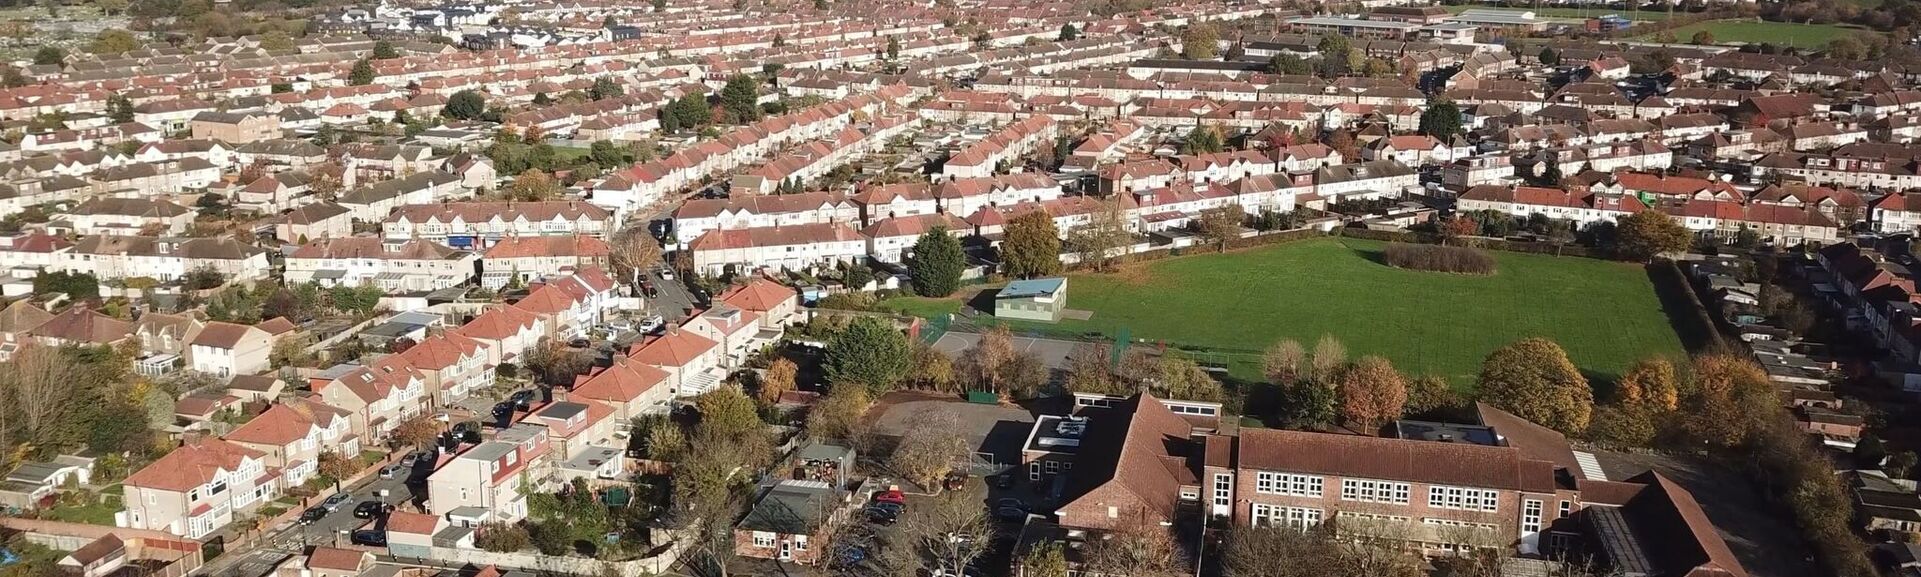 Aerial shot of New Malden